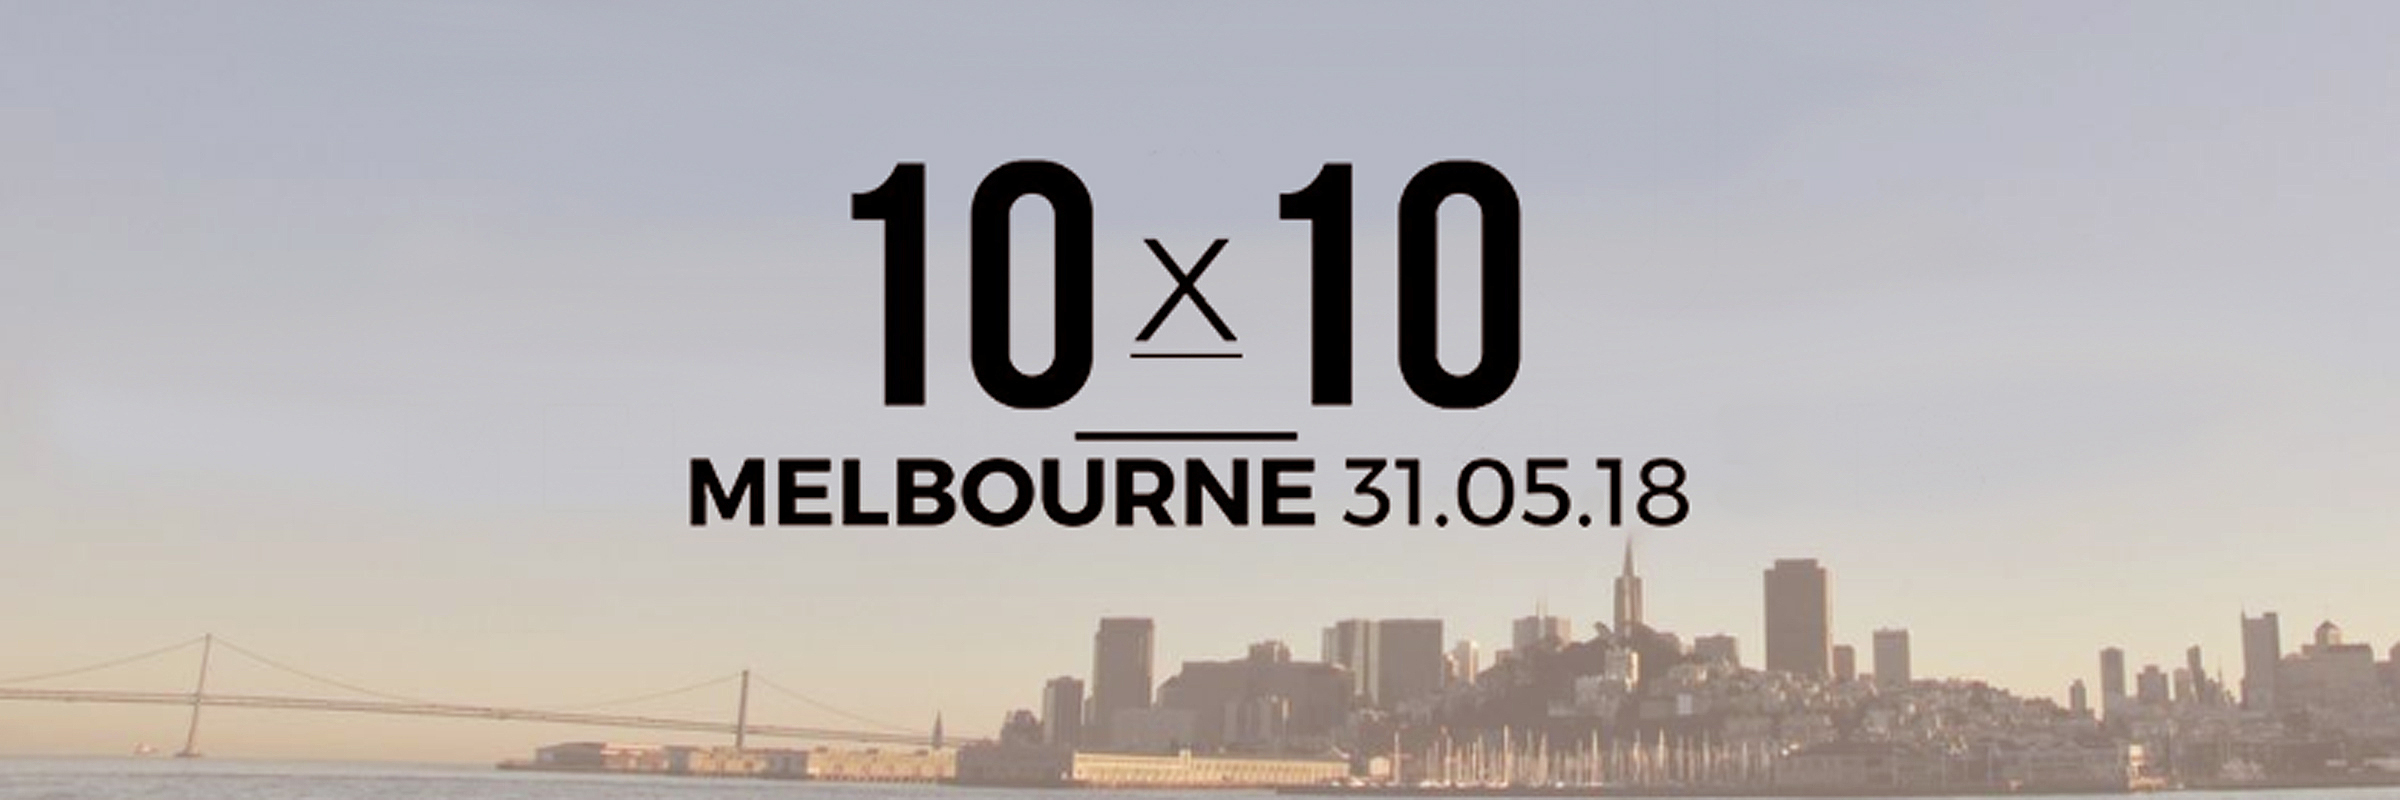 Giving back: 10x10 Melbourne